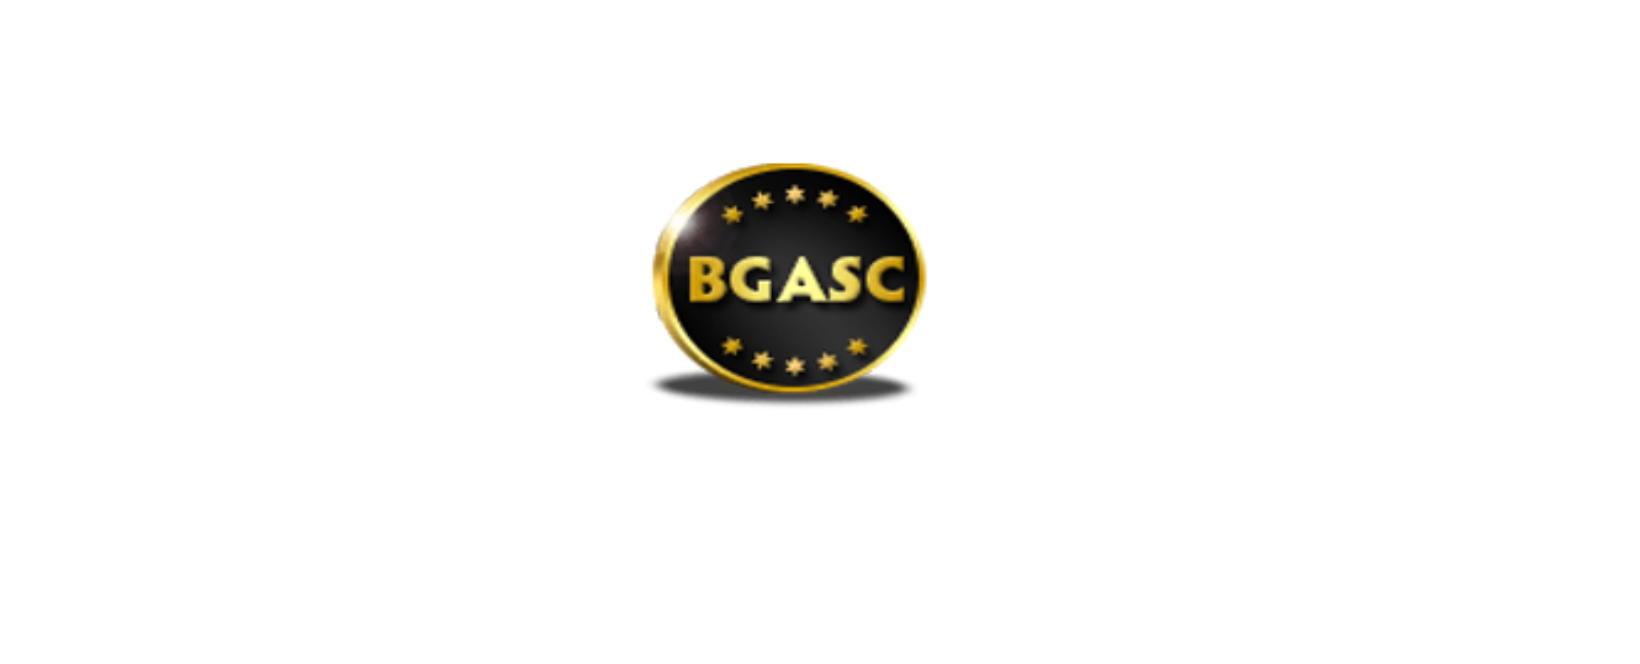 BGASC Discount Code 2022